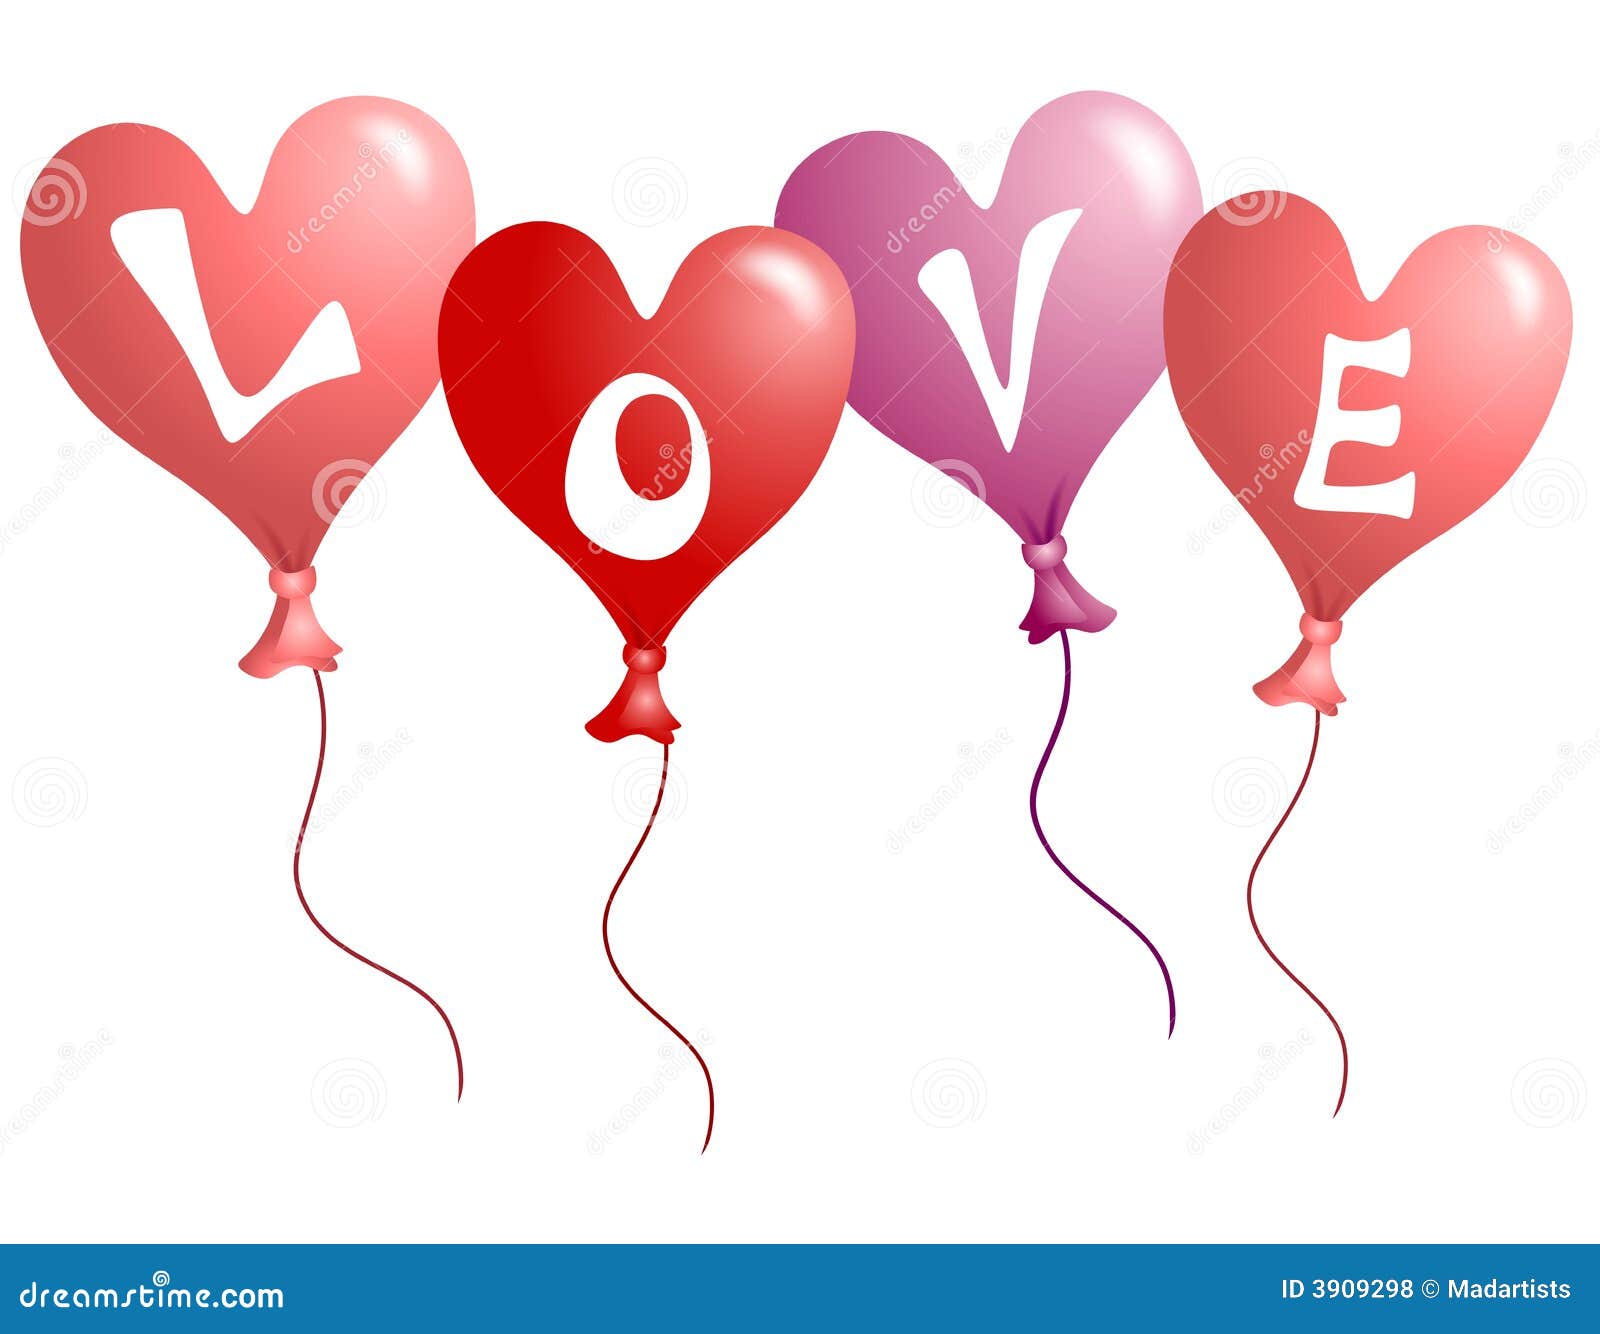 Valentine's Day Love Heart Shaped Balloons Royalty Free Stock Photos ...